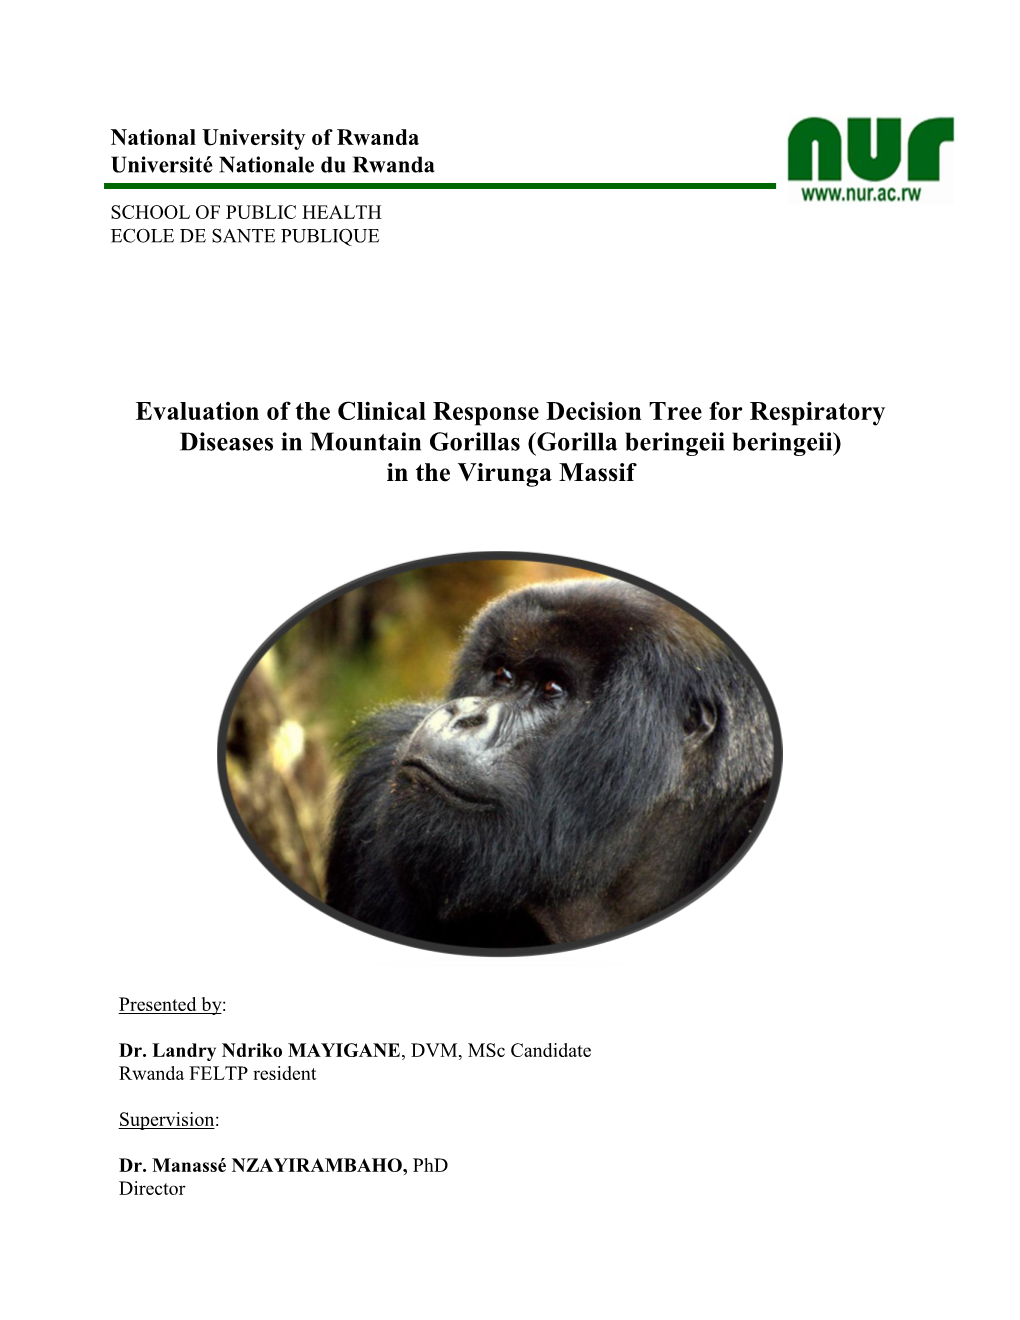 Evaluation of the Clinical Response Decision Tree for Respiratory Diseases in Mountain Gorillas (Gorilla Beringeii Beringeii) in the Virunga Massif